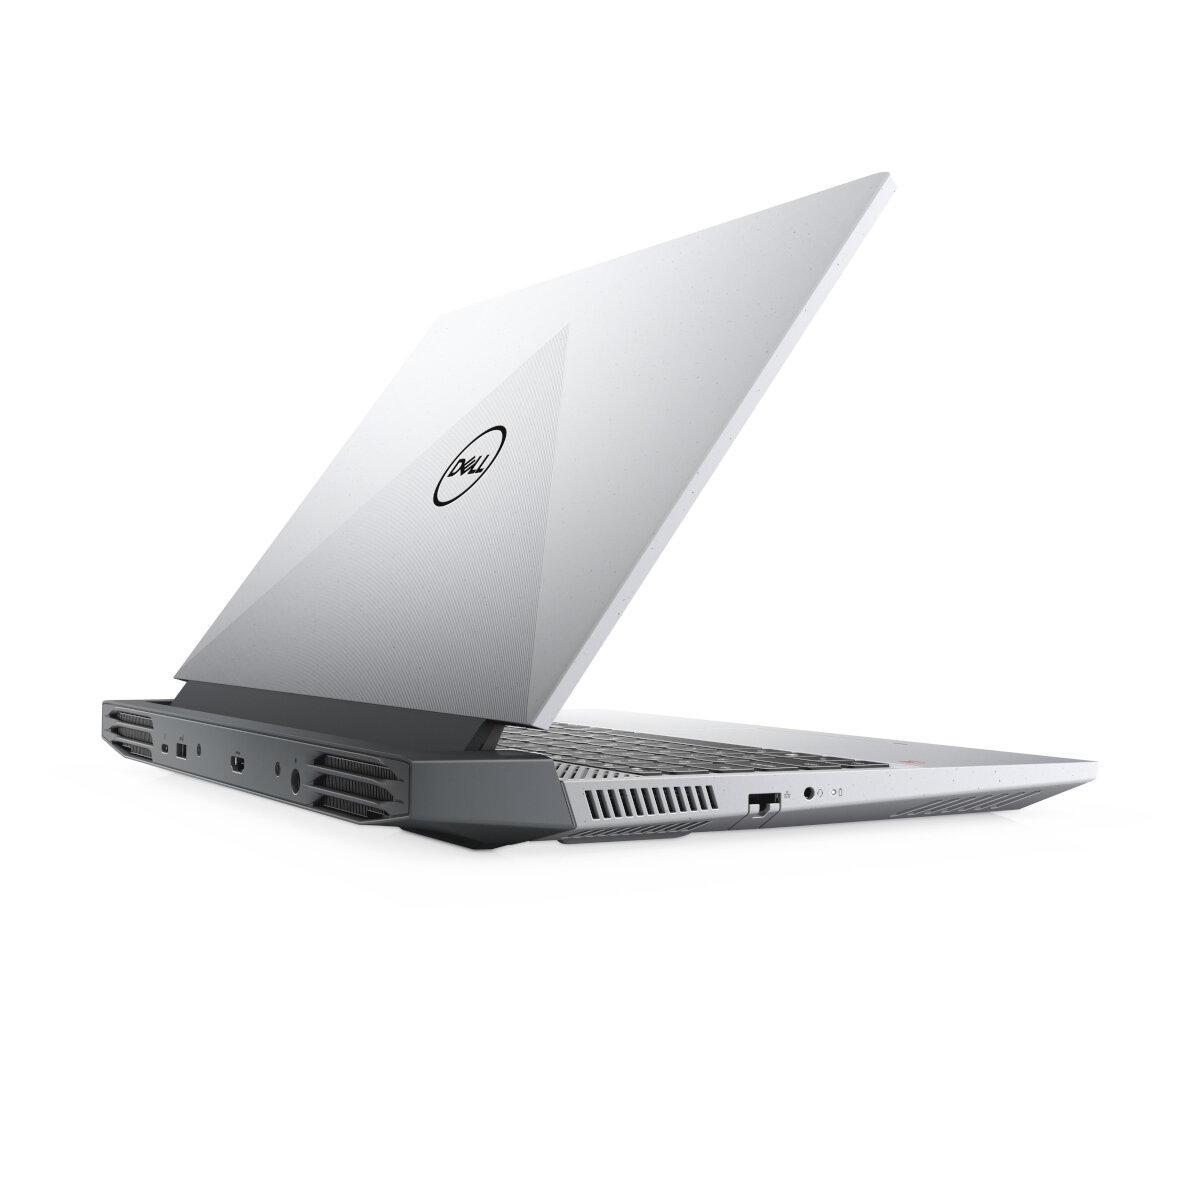 Laptop DELL Inspiron G5 5515 pod kątem z lewej strony